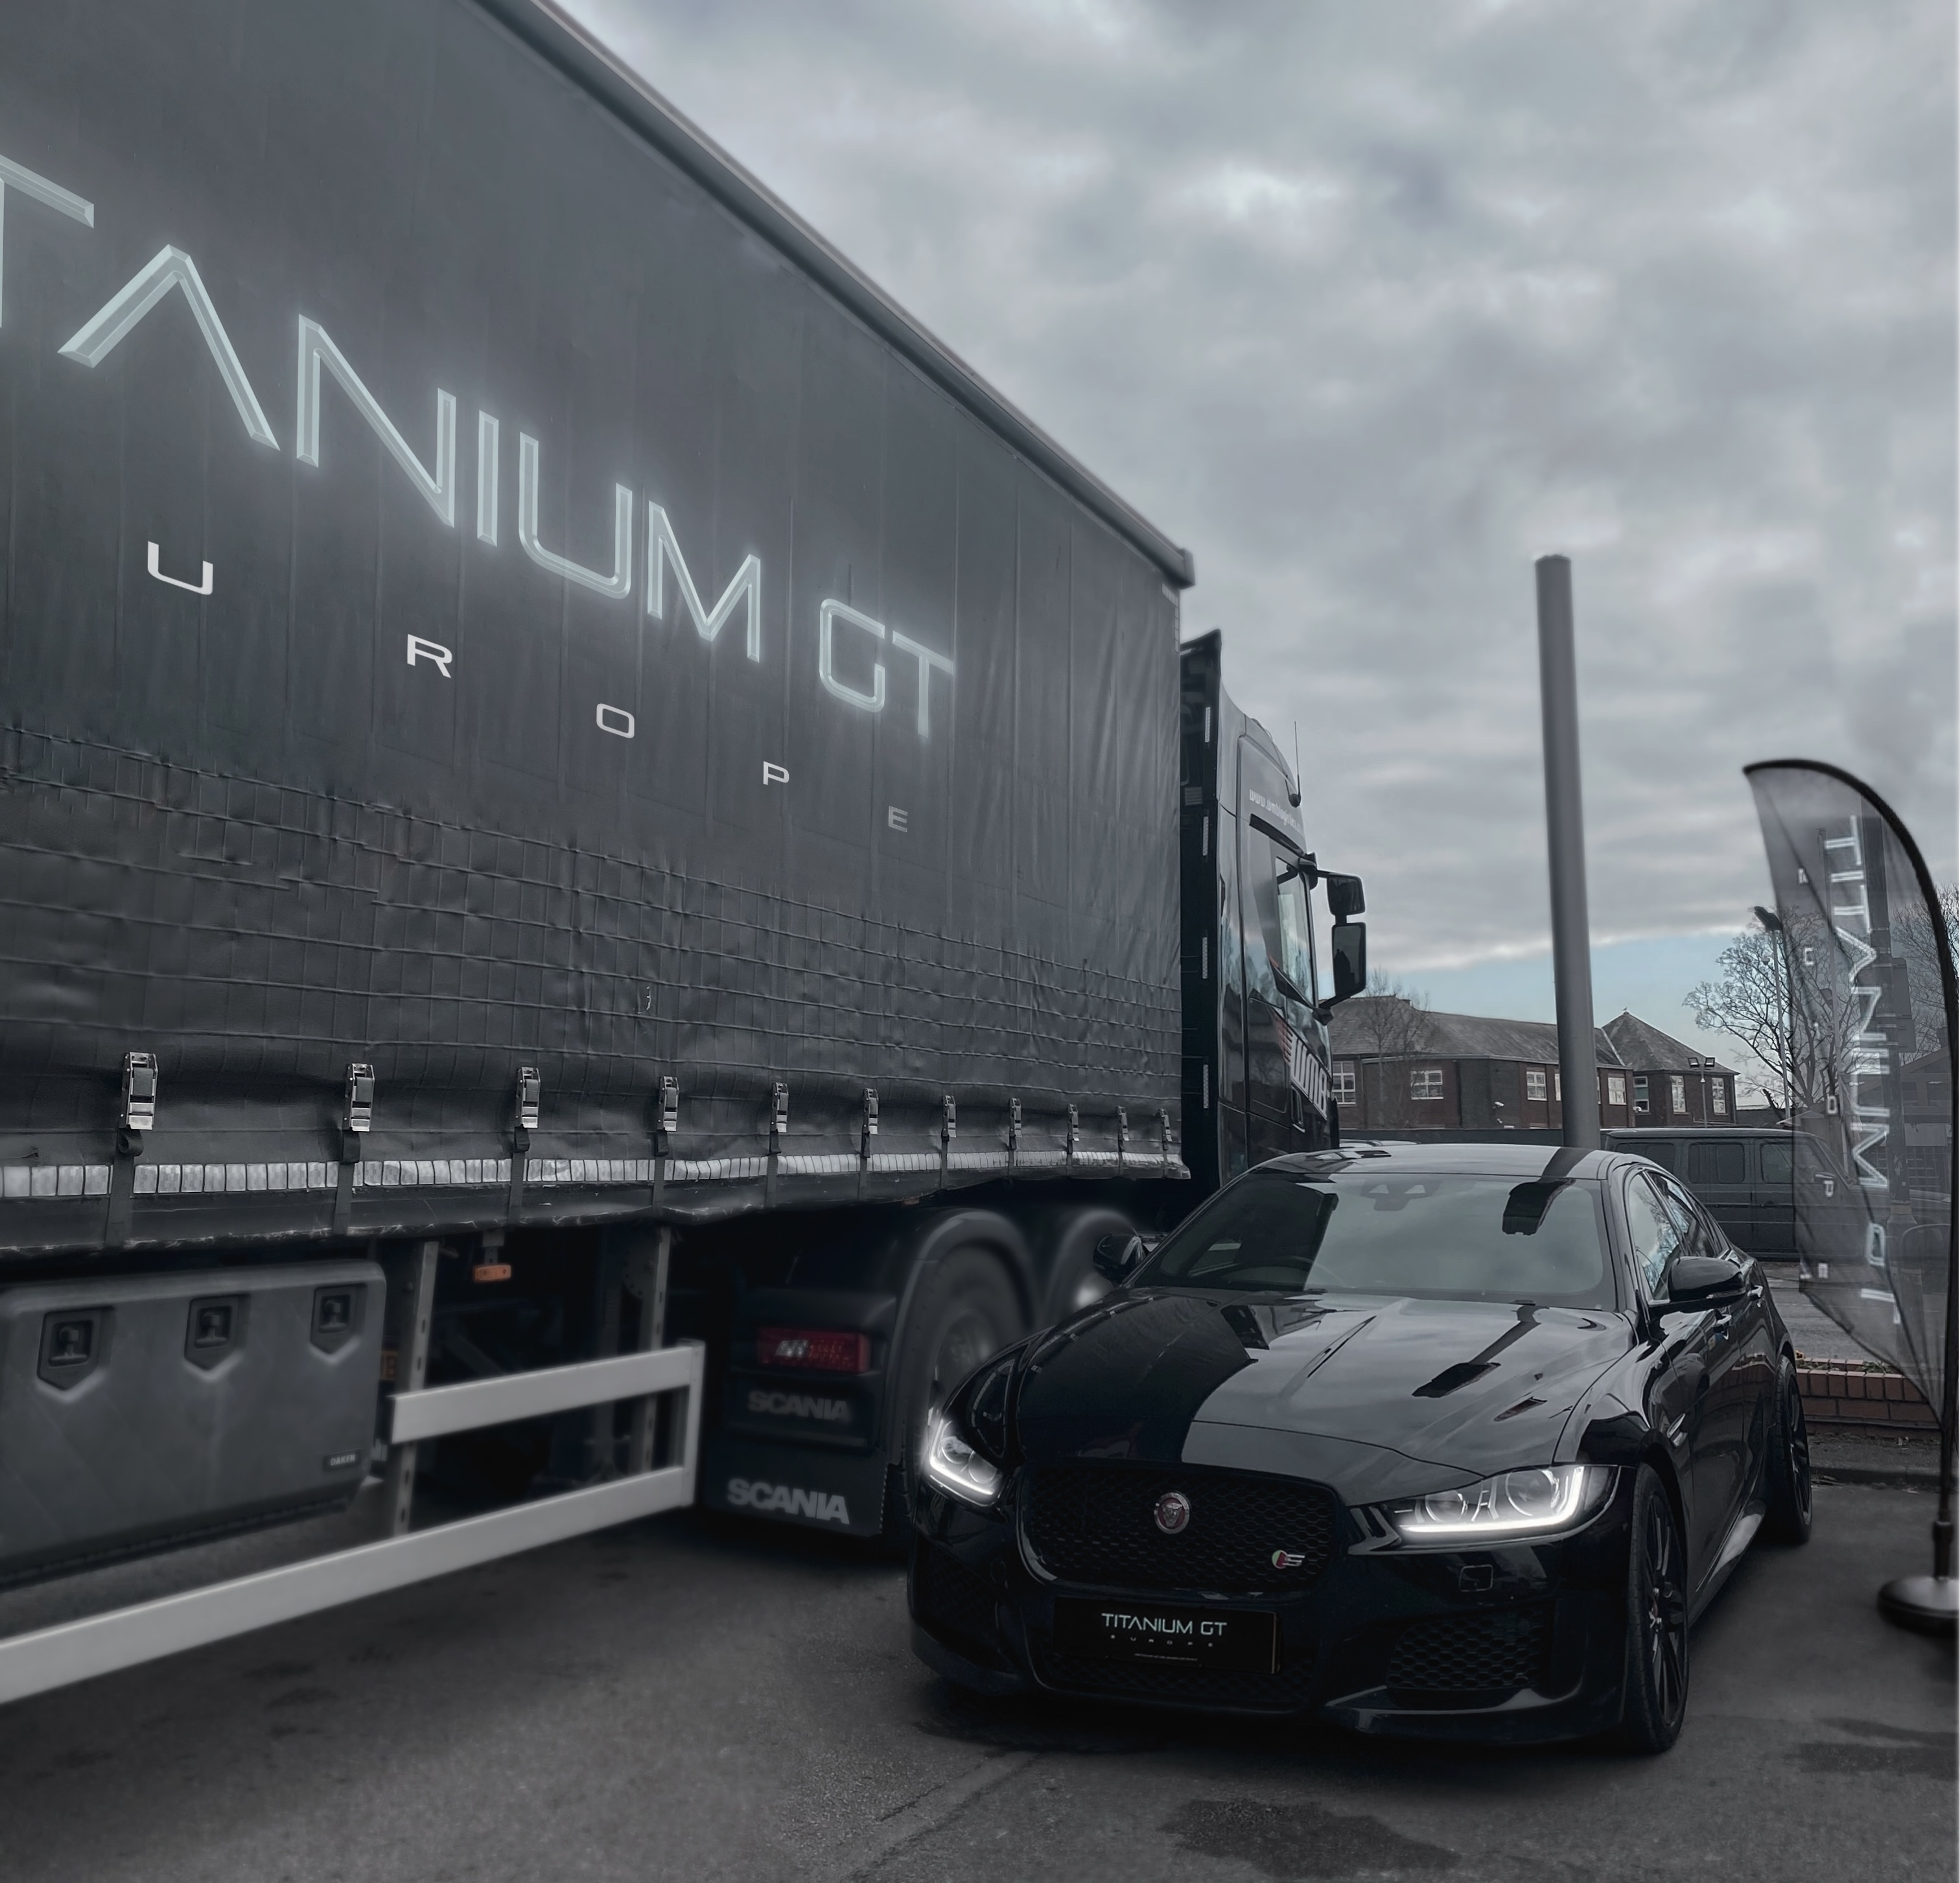 Titanium GT, Jaguar xe s, transport cars, car sales